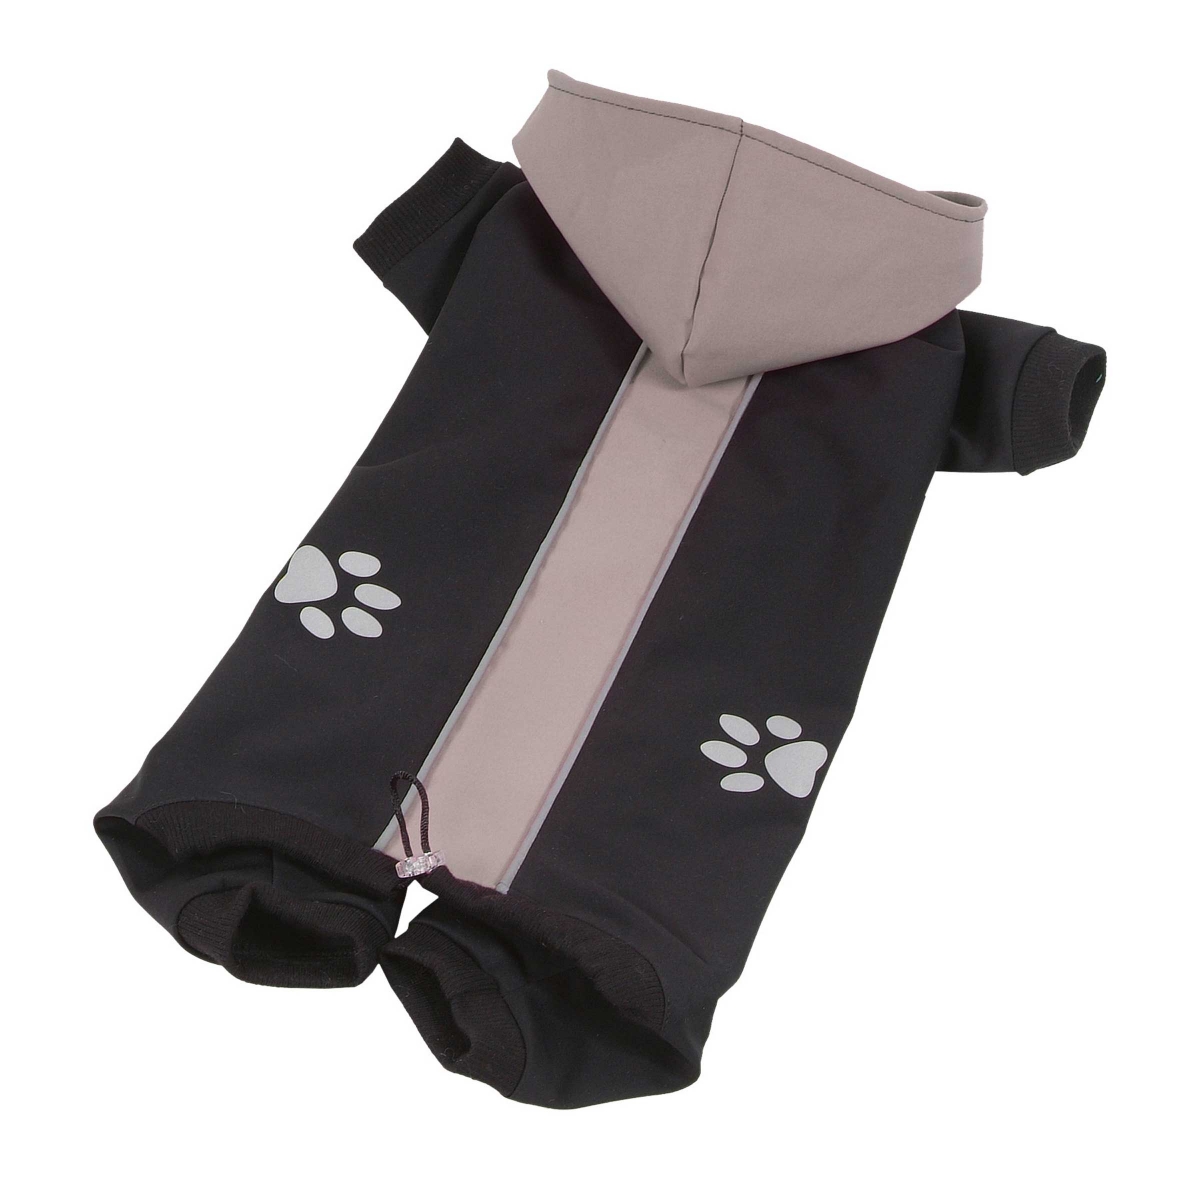 Softshelloverall f. Hunde Reflektor schwarz-grau